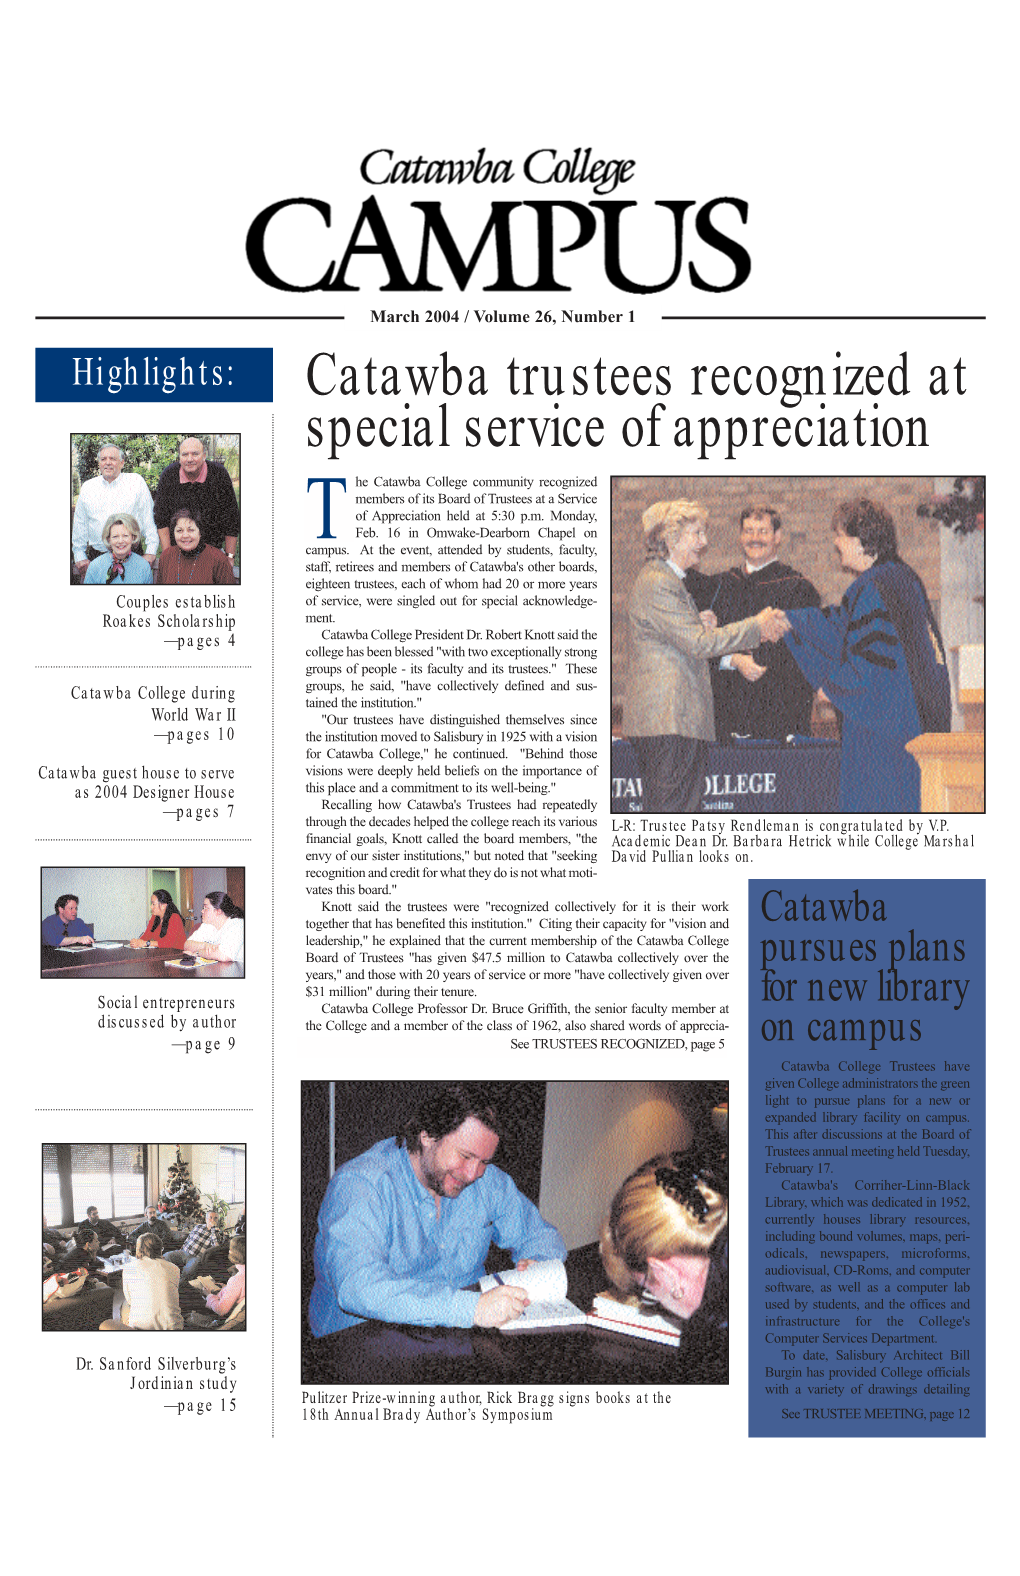 Catawba Trustees Recognized at Special Service of Appreciation